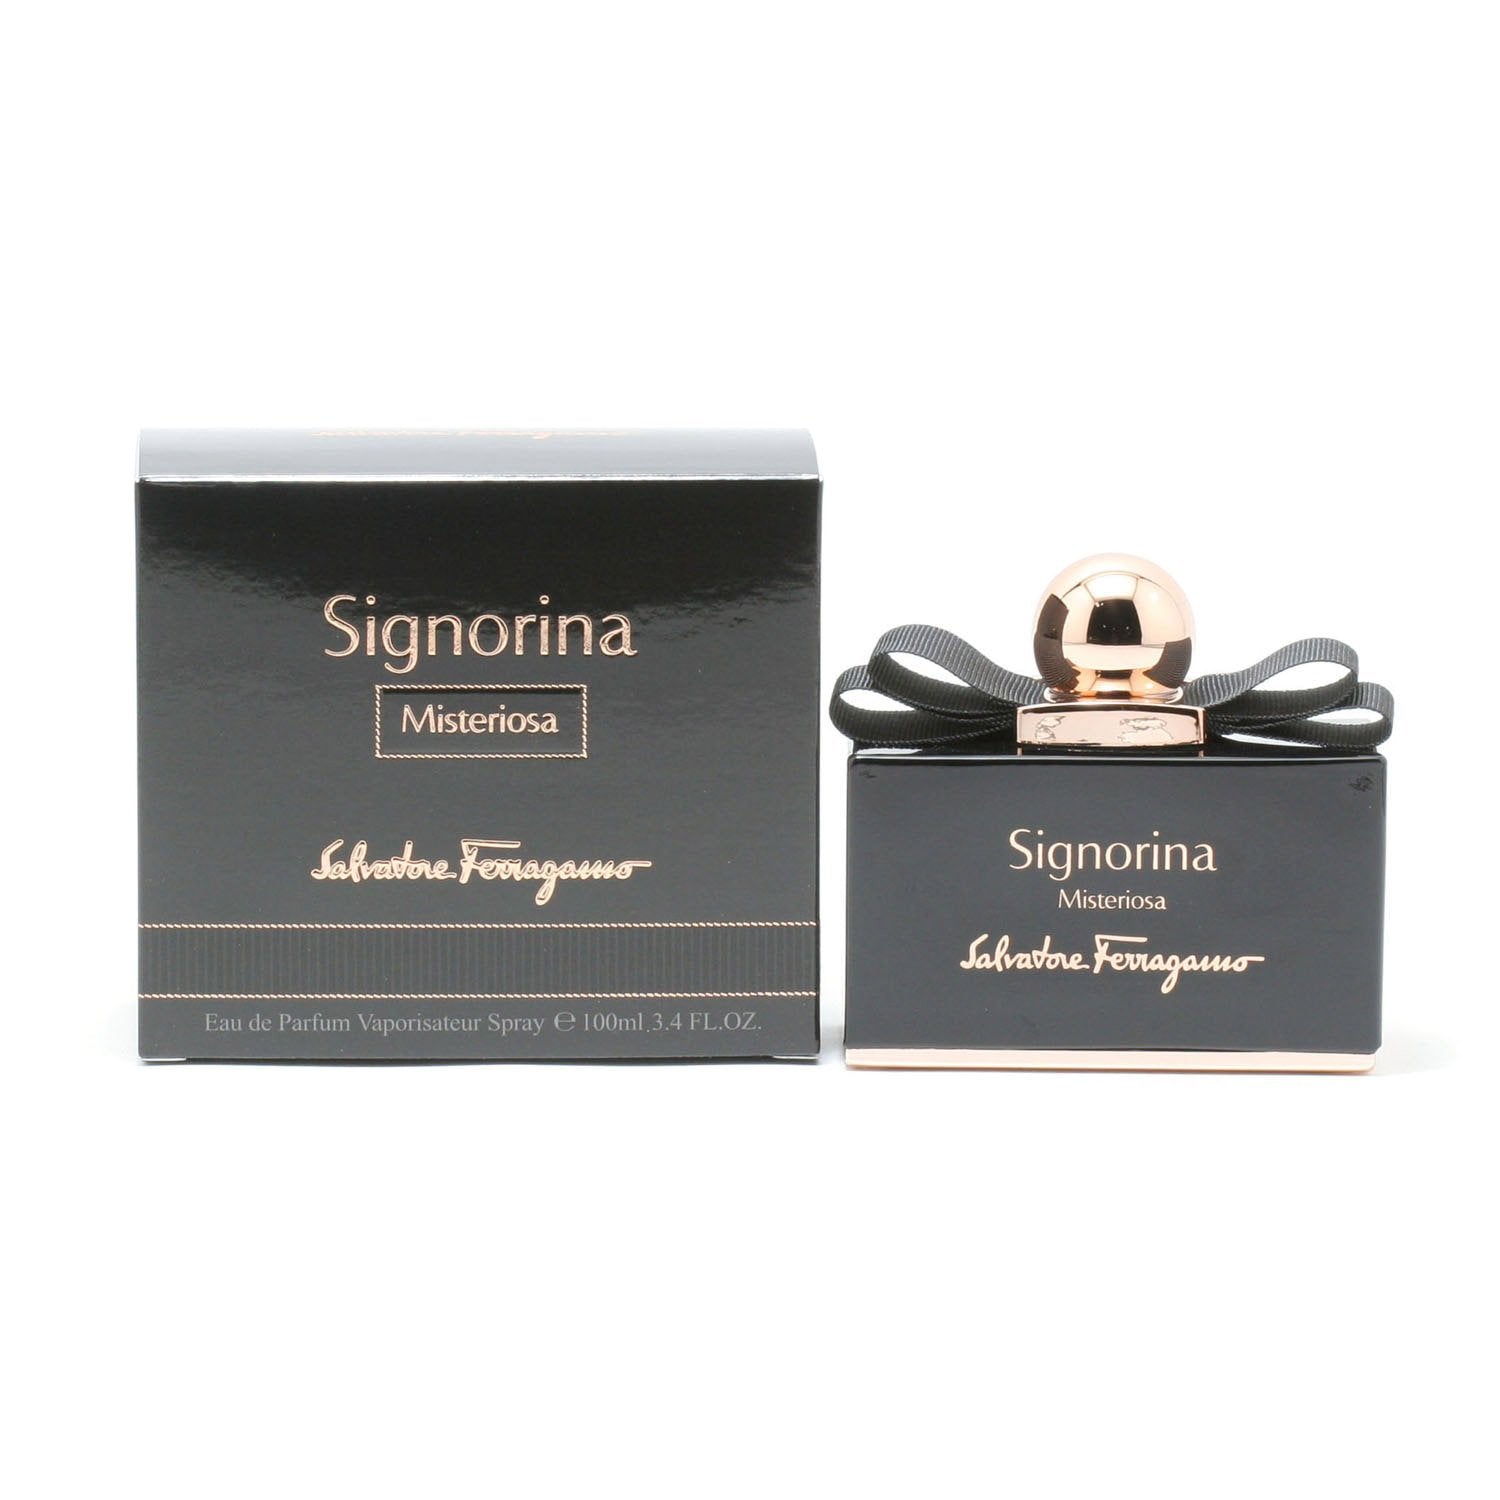 Perfume - SIGNORINA MISTERIOSA FOR WOMEN BY SALVATORE FERRAGAMO - EAU DE PARFUM SPRAY, 3.4 OZ